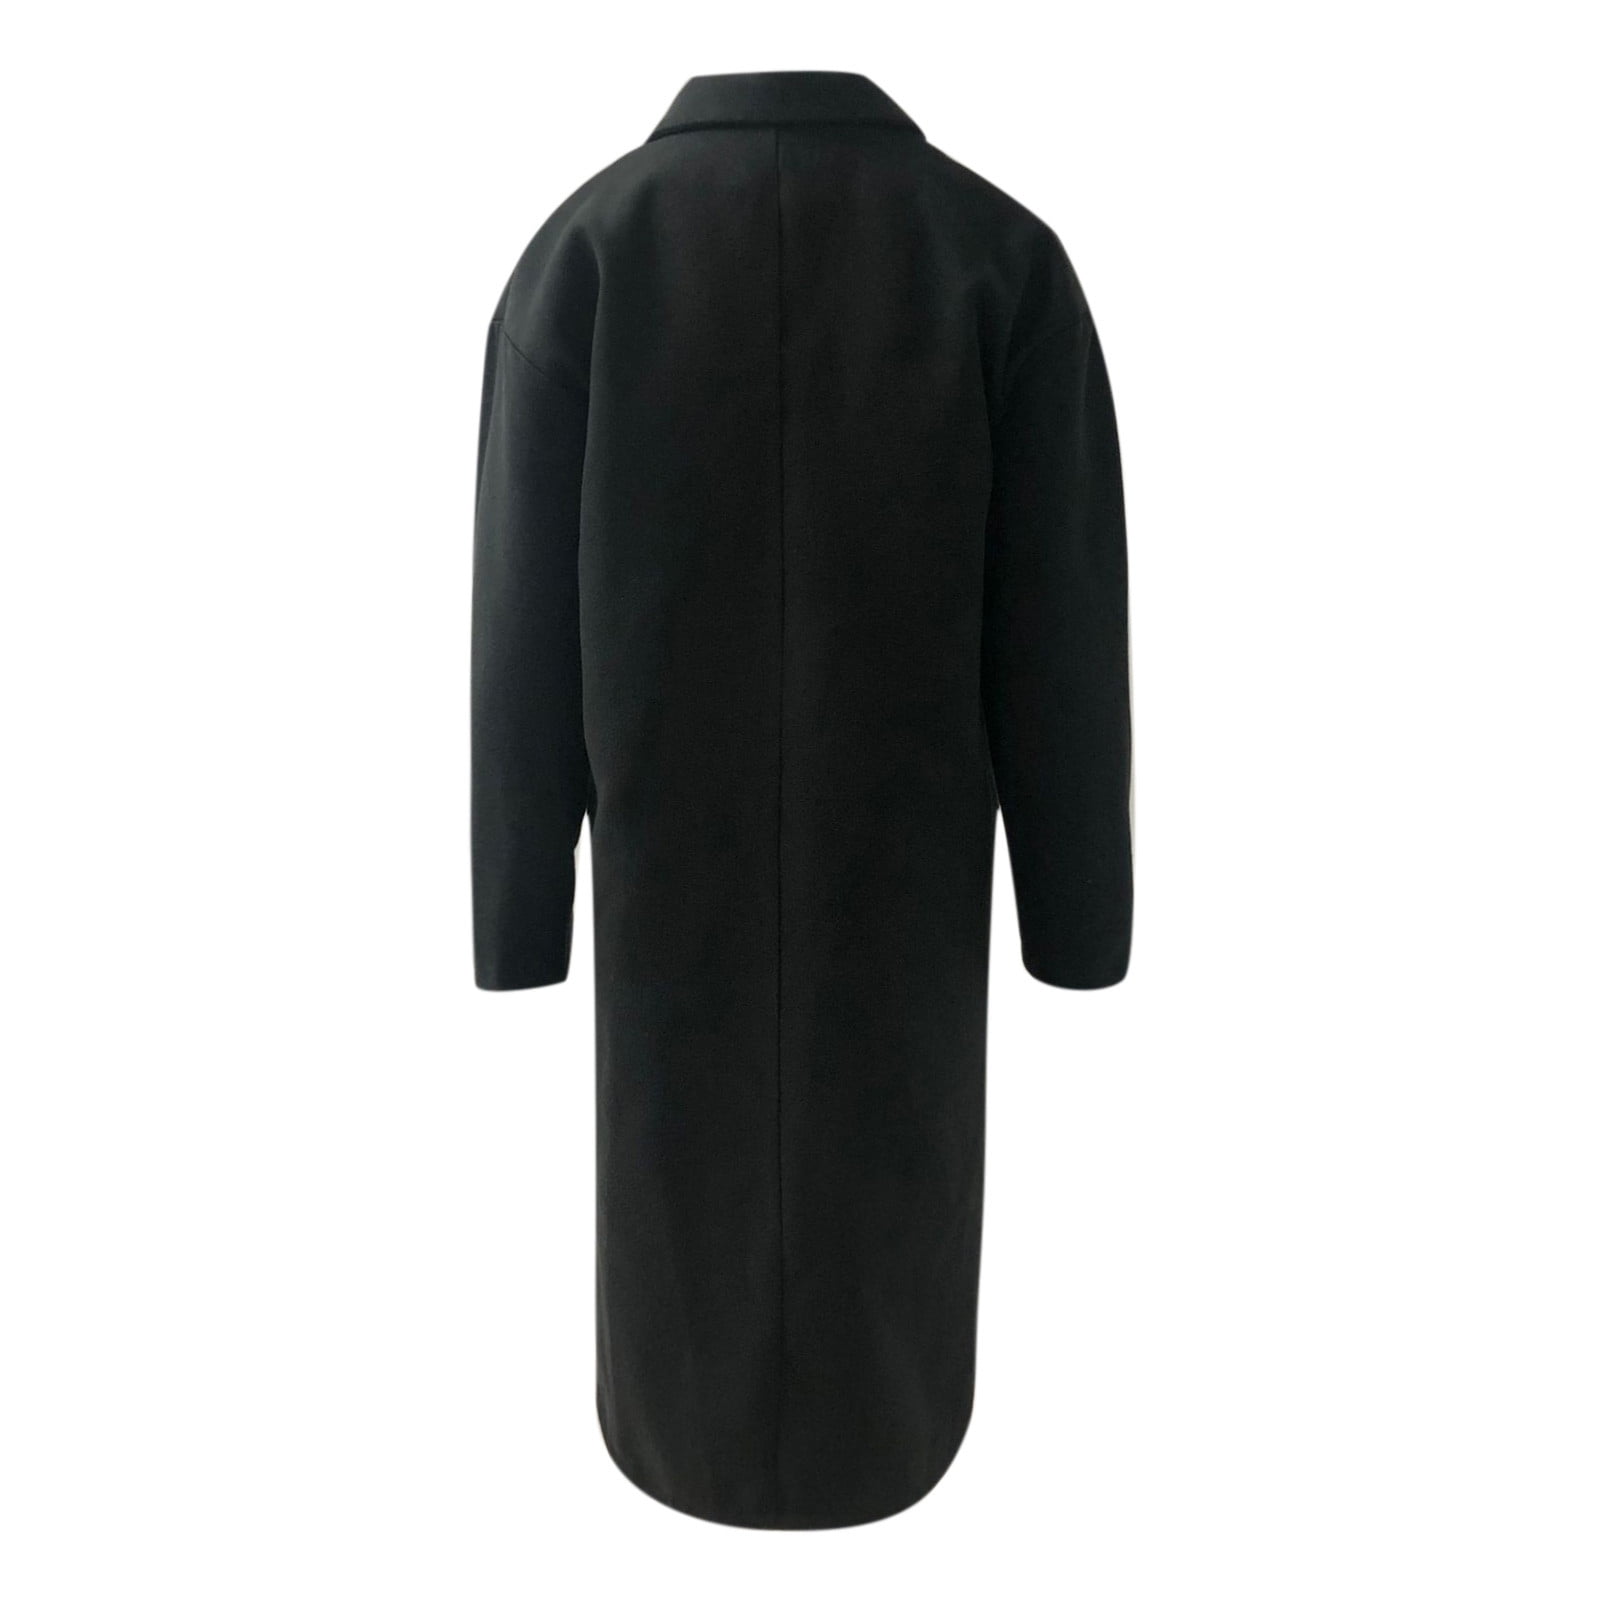 Hfyihgf Wool Trench Coats for Women Winter Fashion Notch Collar Double  Breasted Peacoats Plus Size Long Jackets Casual Walker Coat Blue 4XL 